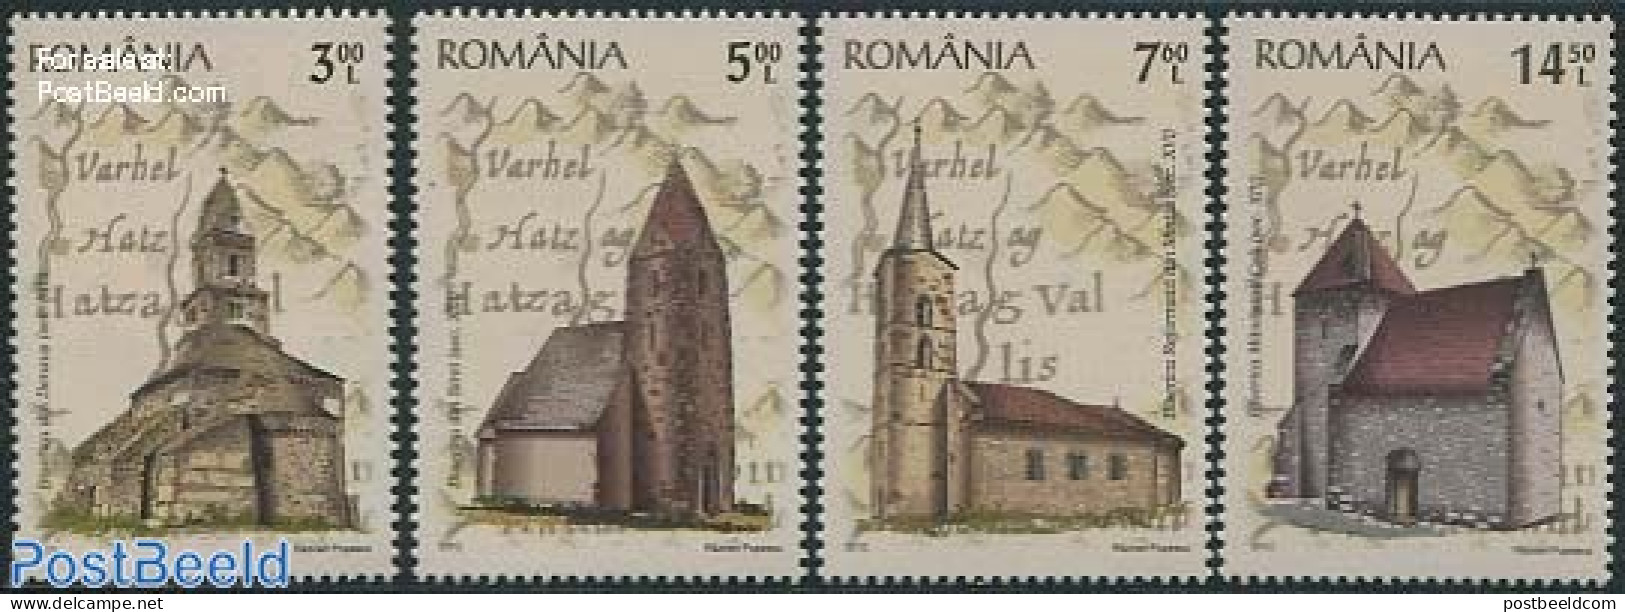 Romania 2012 Tara Hategului Church 4v, Mint NH, Religion - Churches, Temples, Mosques, Synagogues - Nuovi